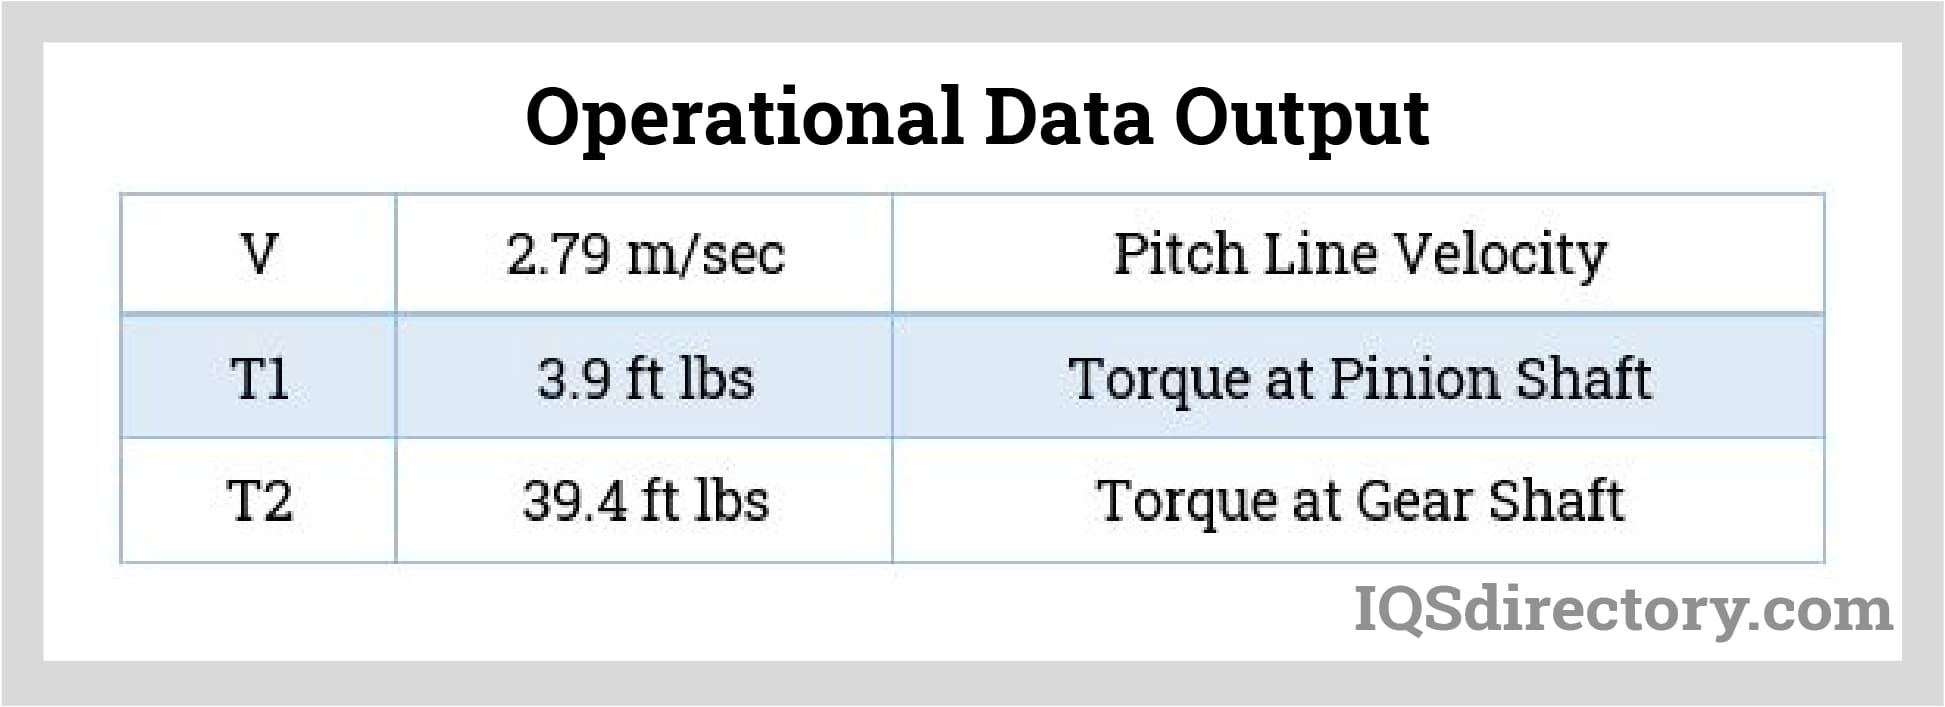 Operational Data Output